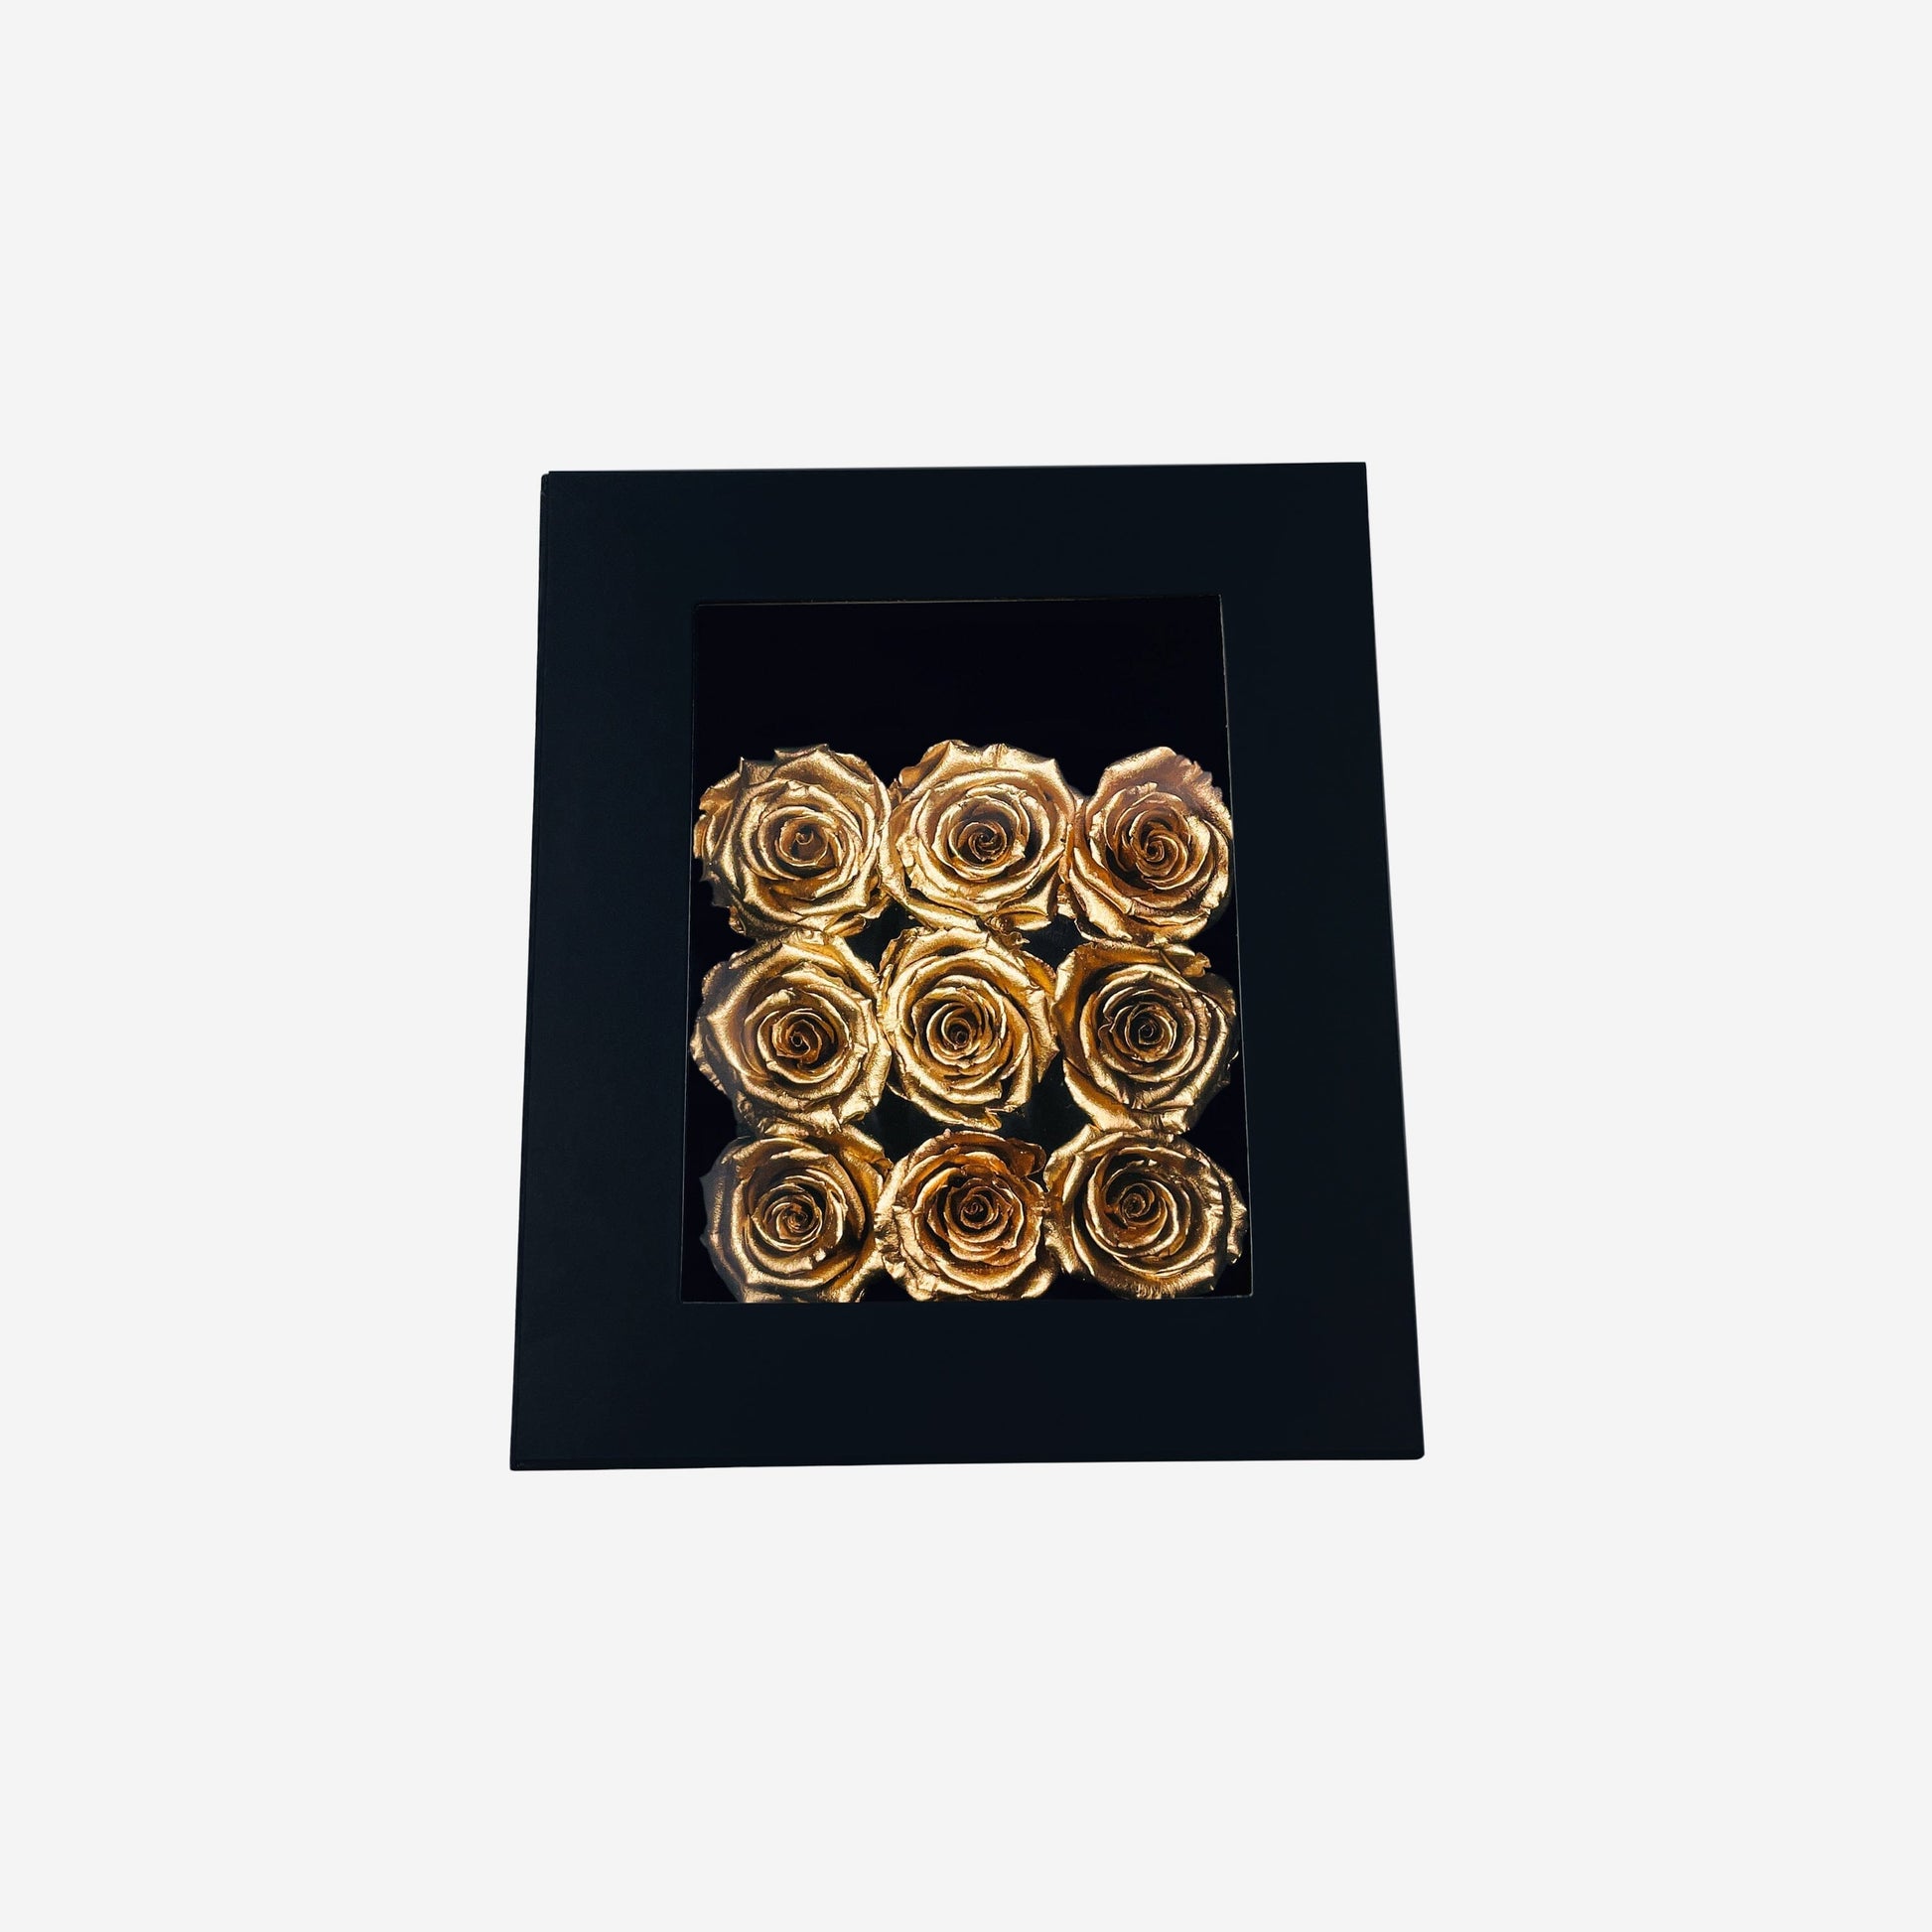 Trapezoid Black Box | Gold Roses - The Million Roses